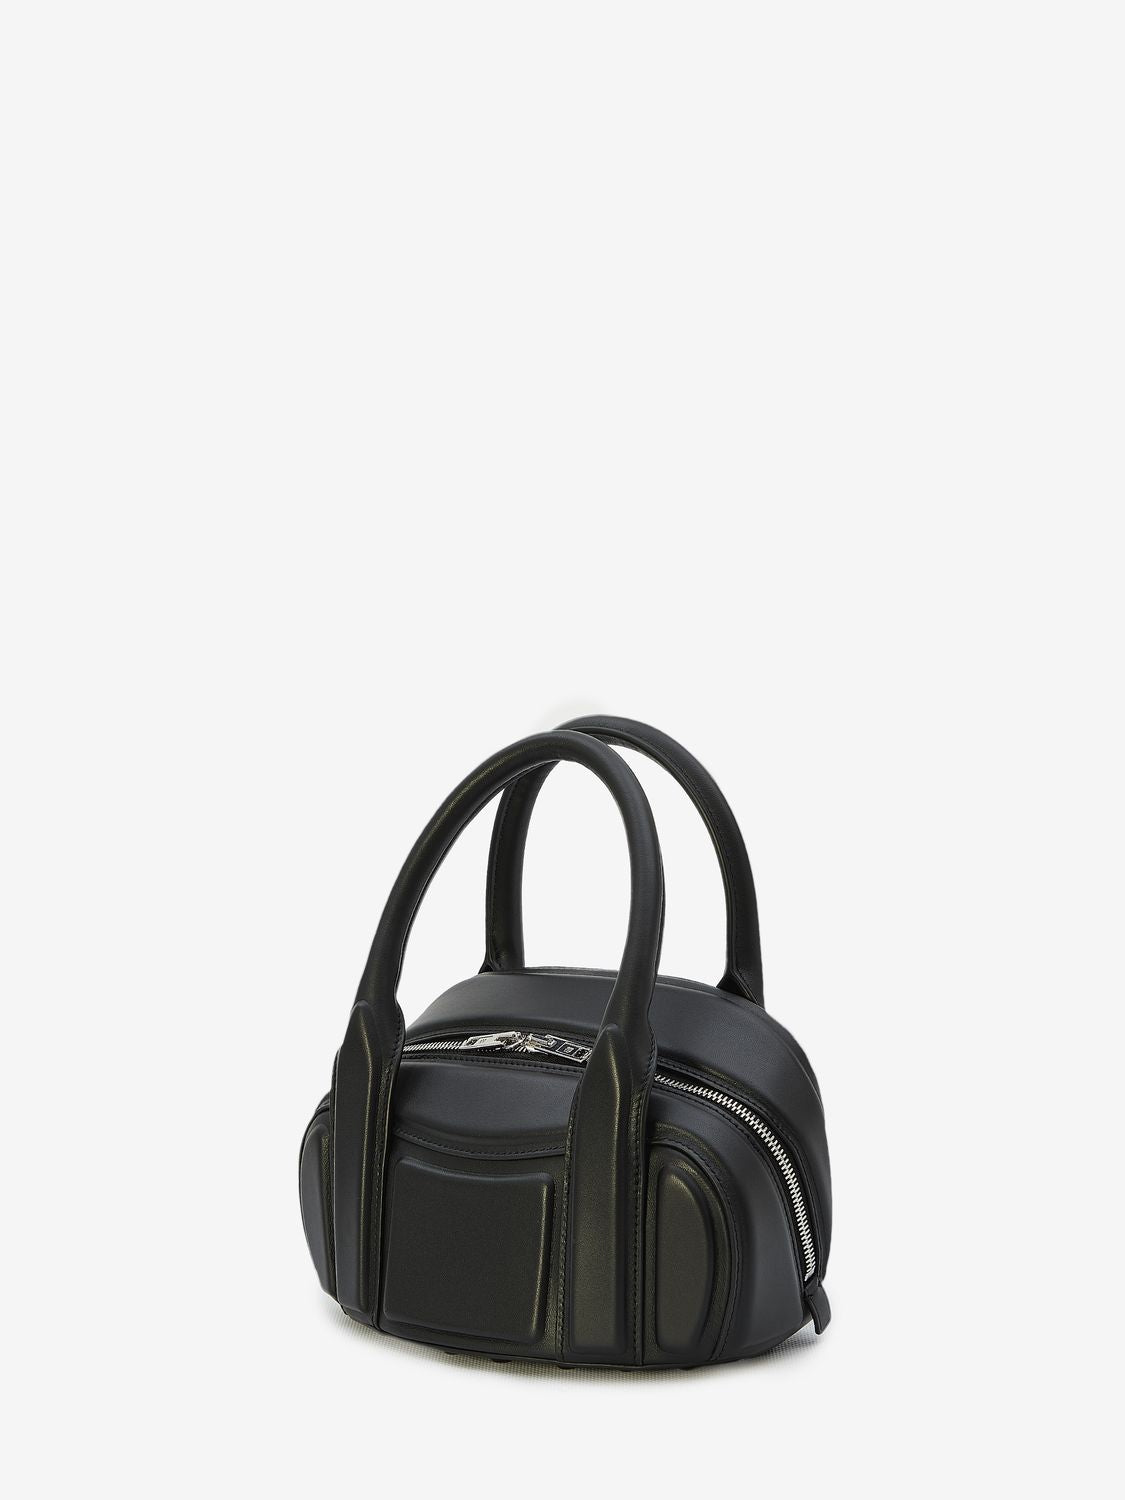 ALEXANDER WANG Black Lambskin Mini Top-Handle Handbag with Detachable Strap, 13x22x8cm